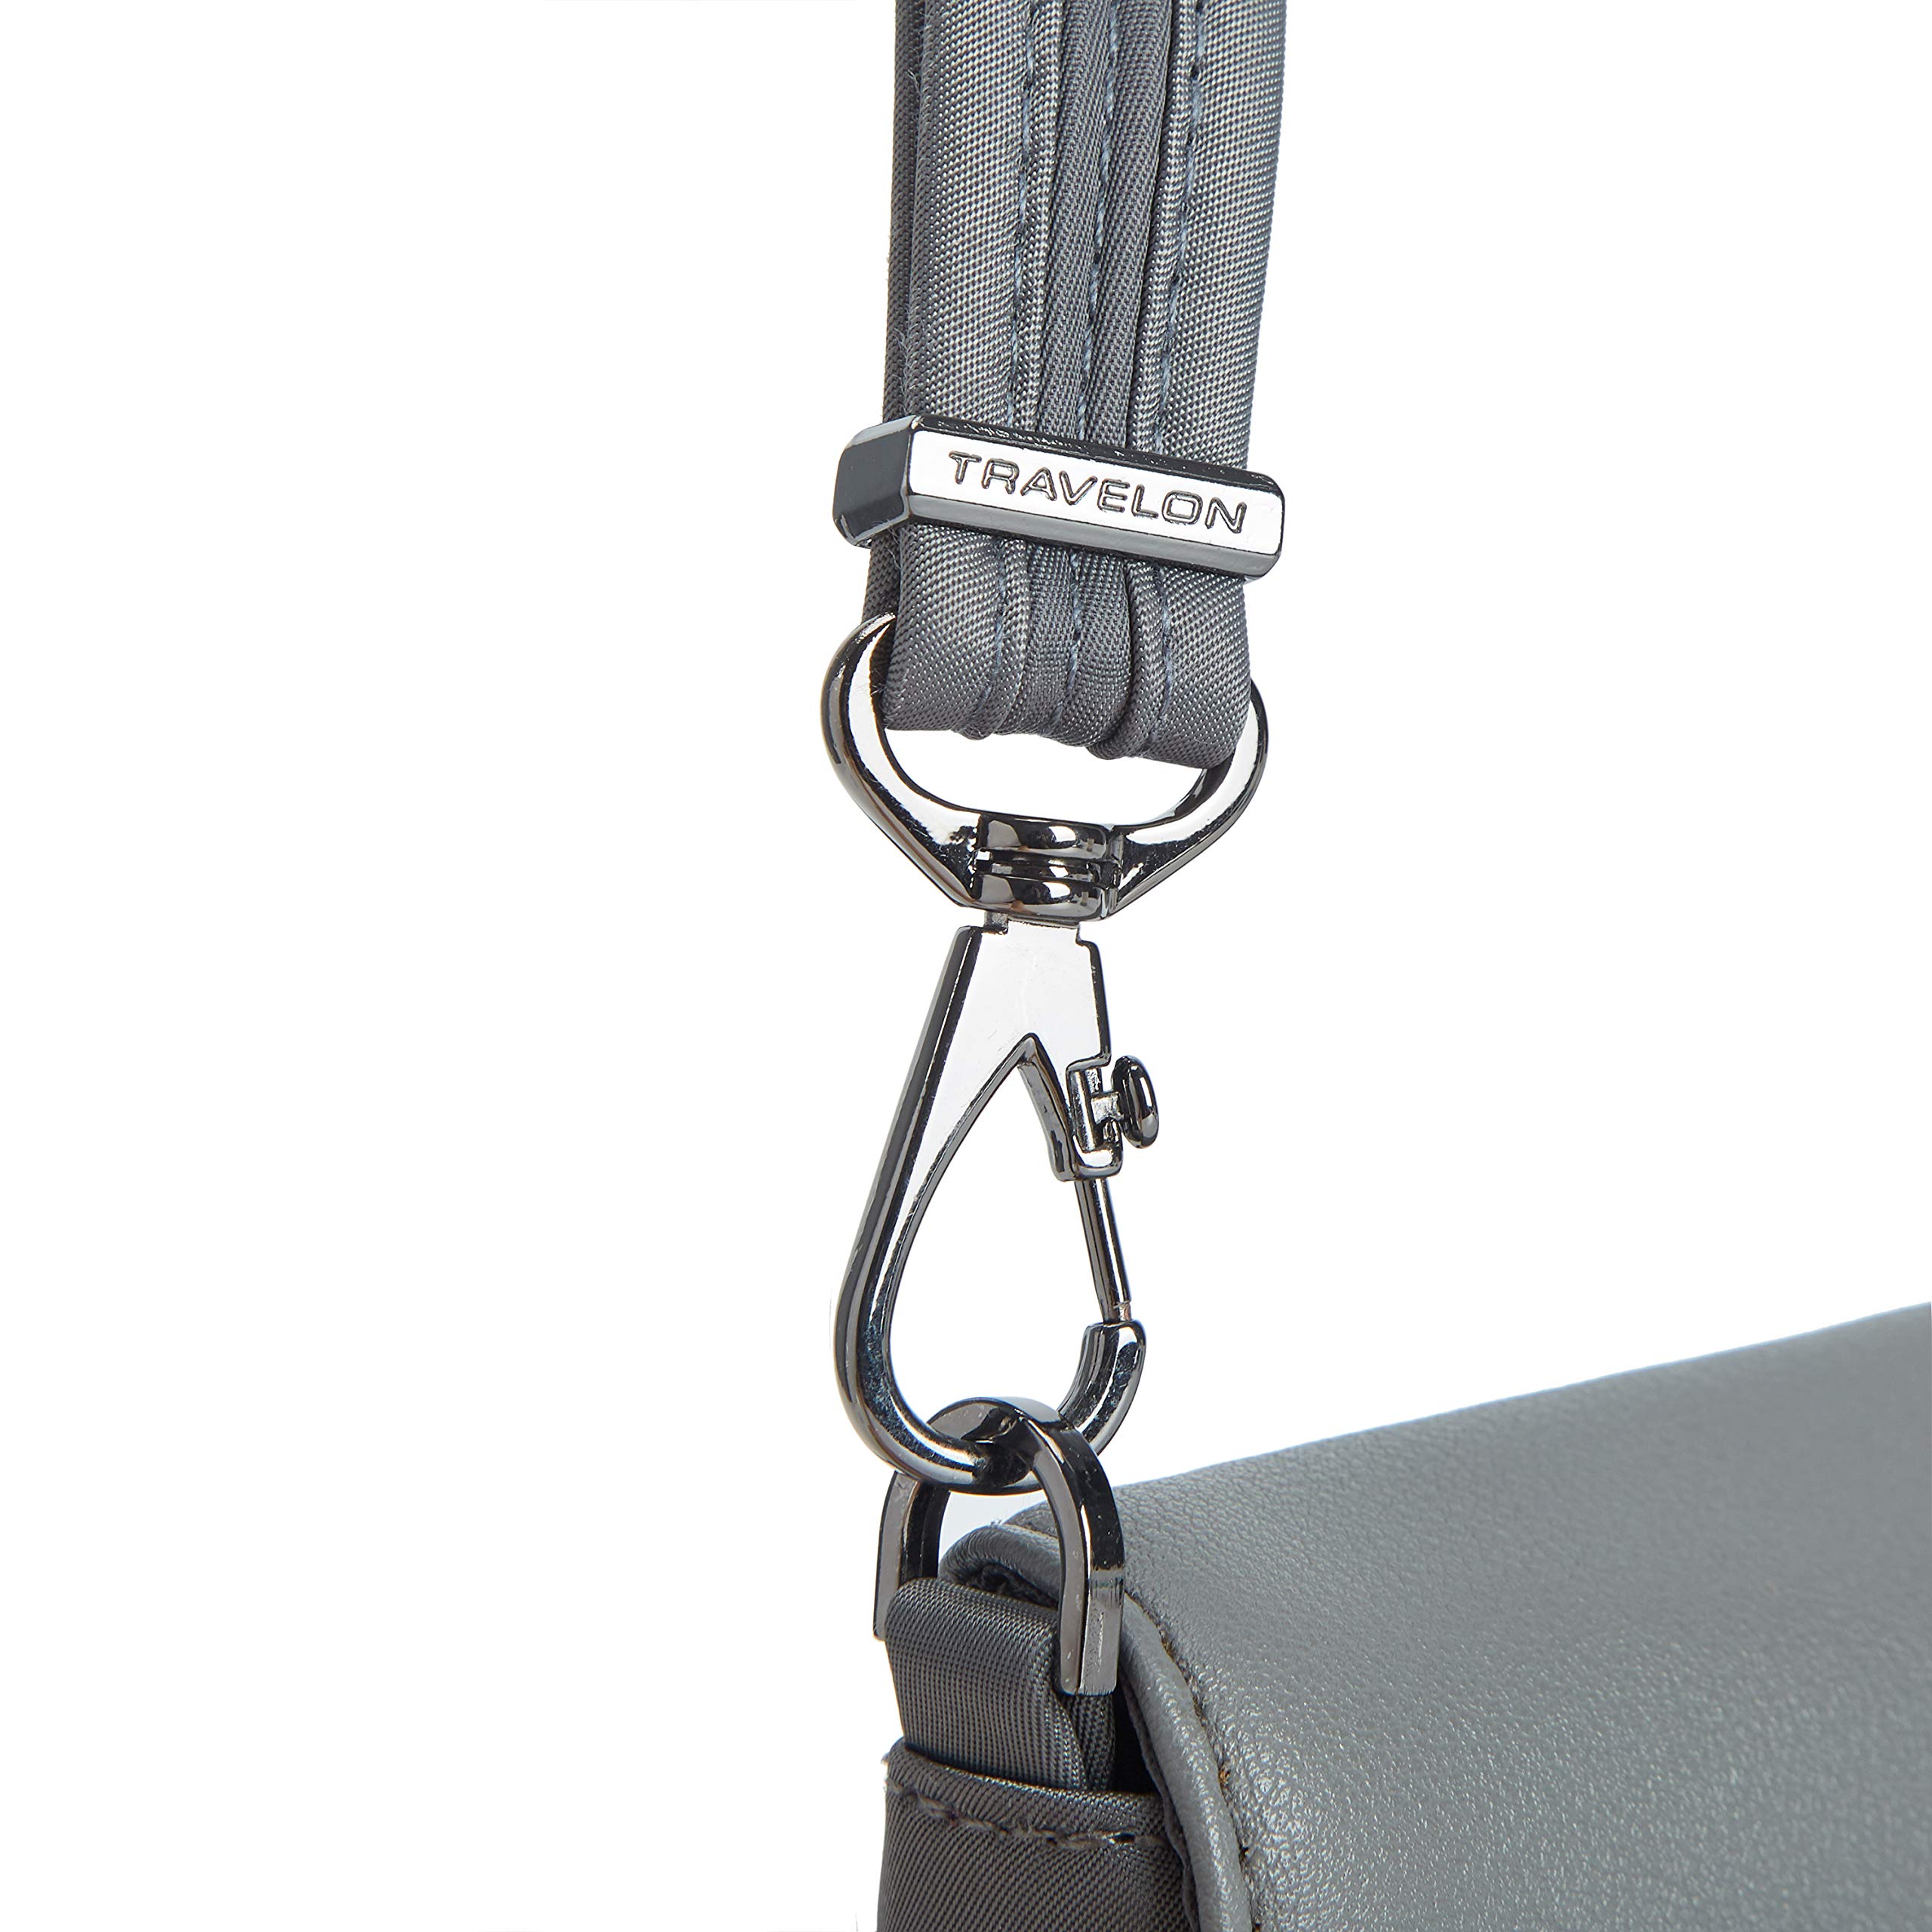 Travelon unisex adult Travelon: Addison - Anti-theft Convertible Crossbody/Belt Gray Crossbody anti theft belt bag, Gray, One Size US